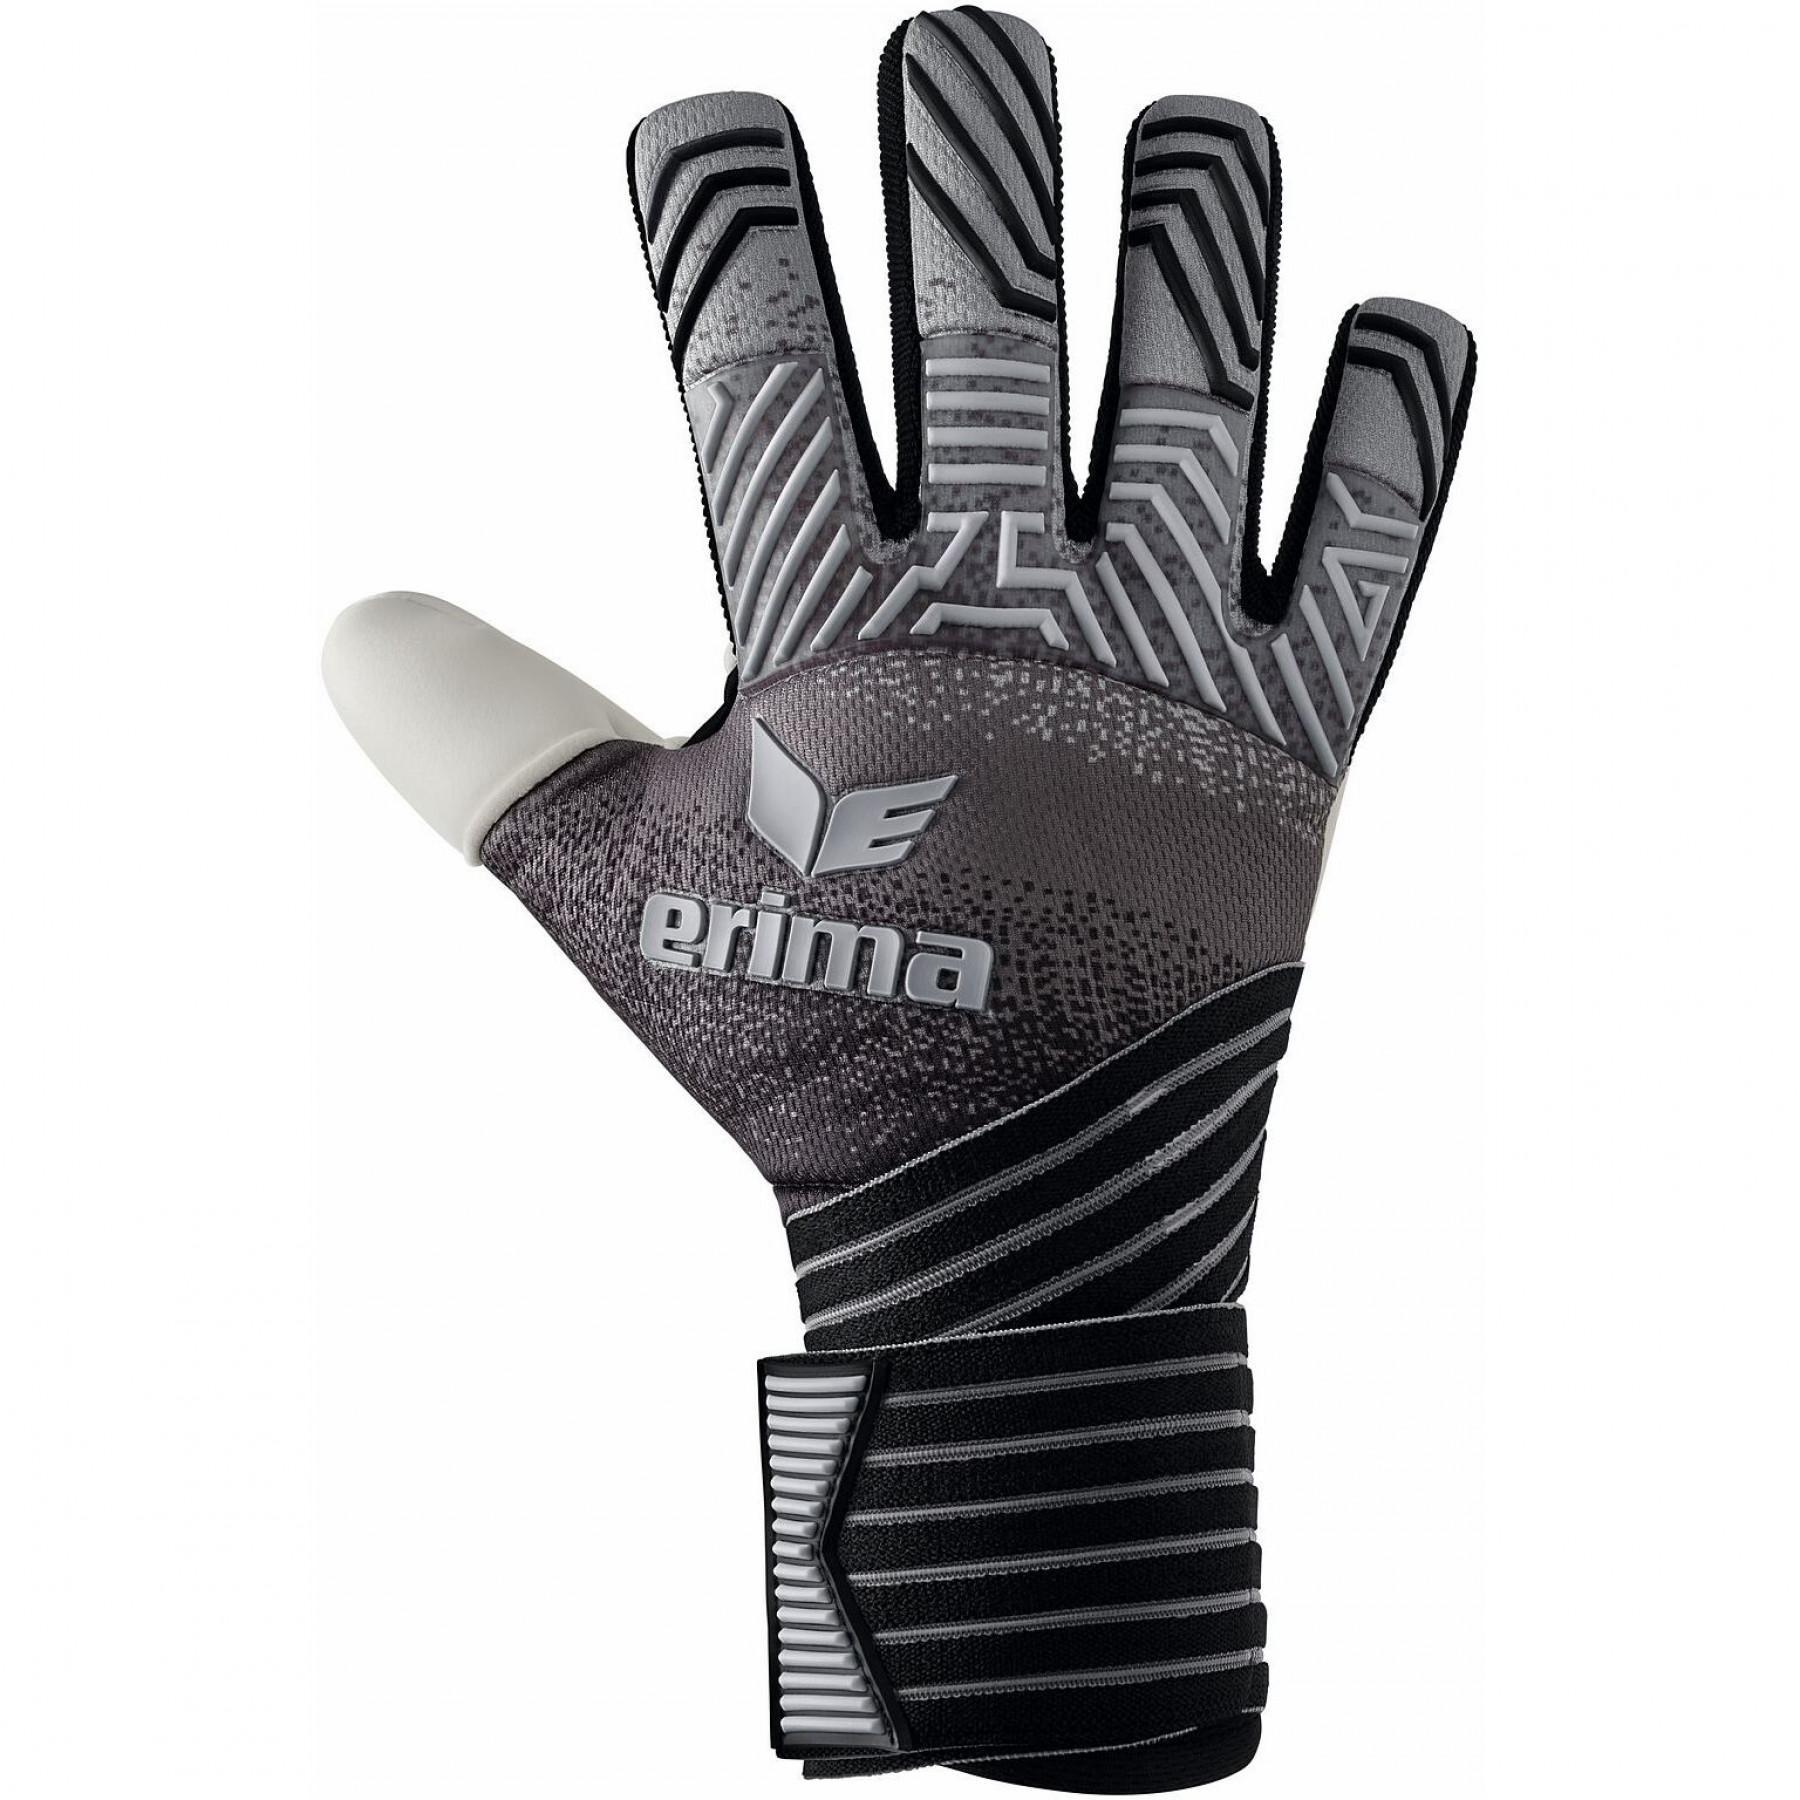 Goalkeeper gloves Erima Flex RD Pro